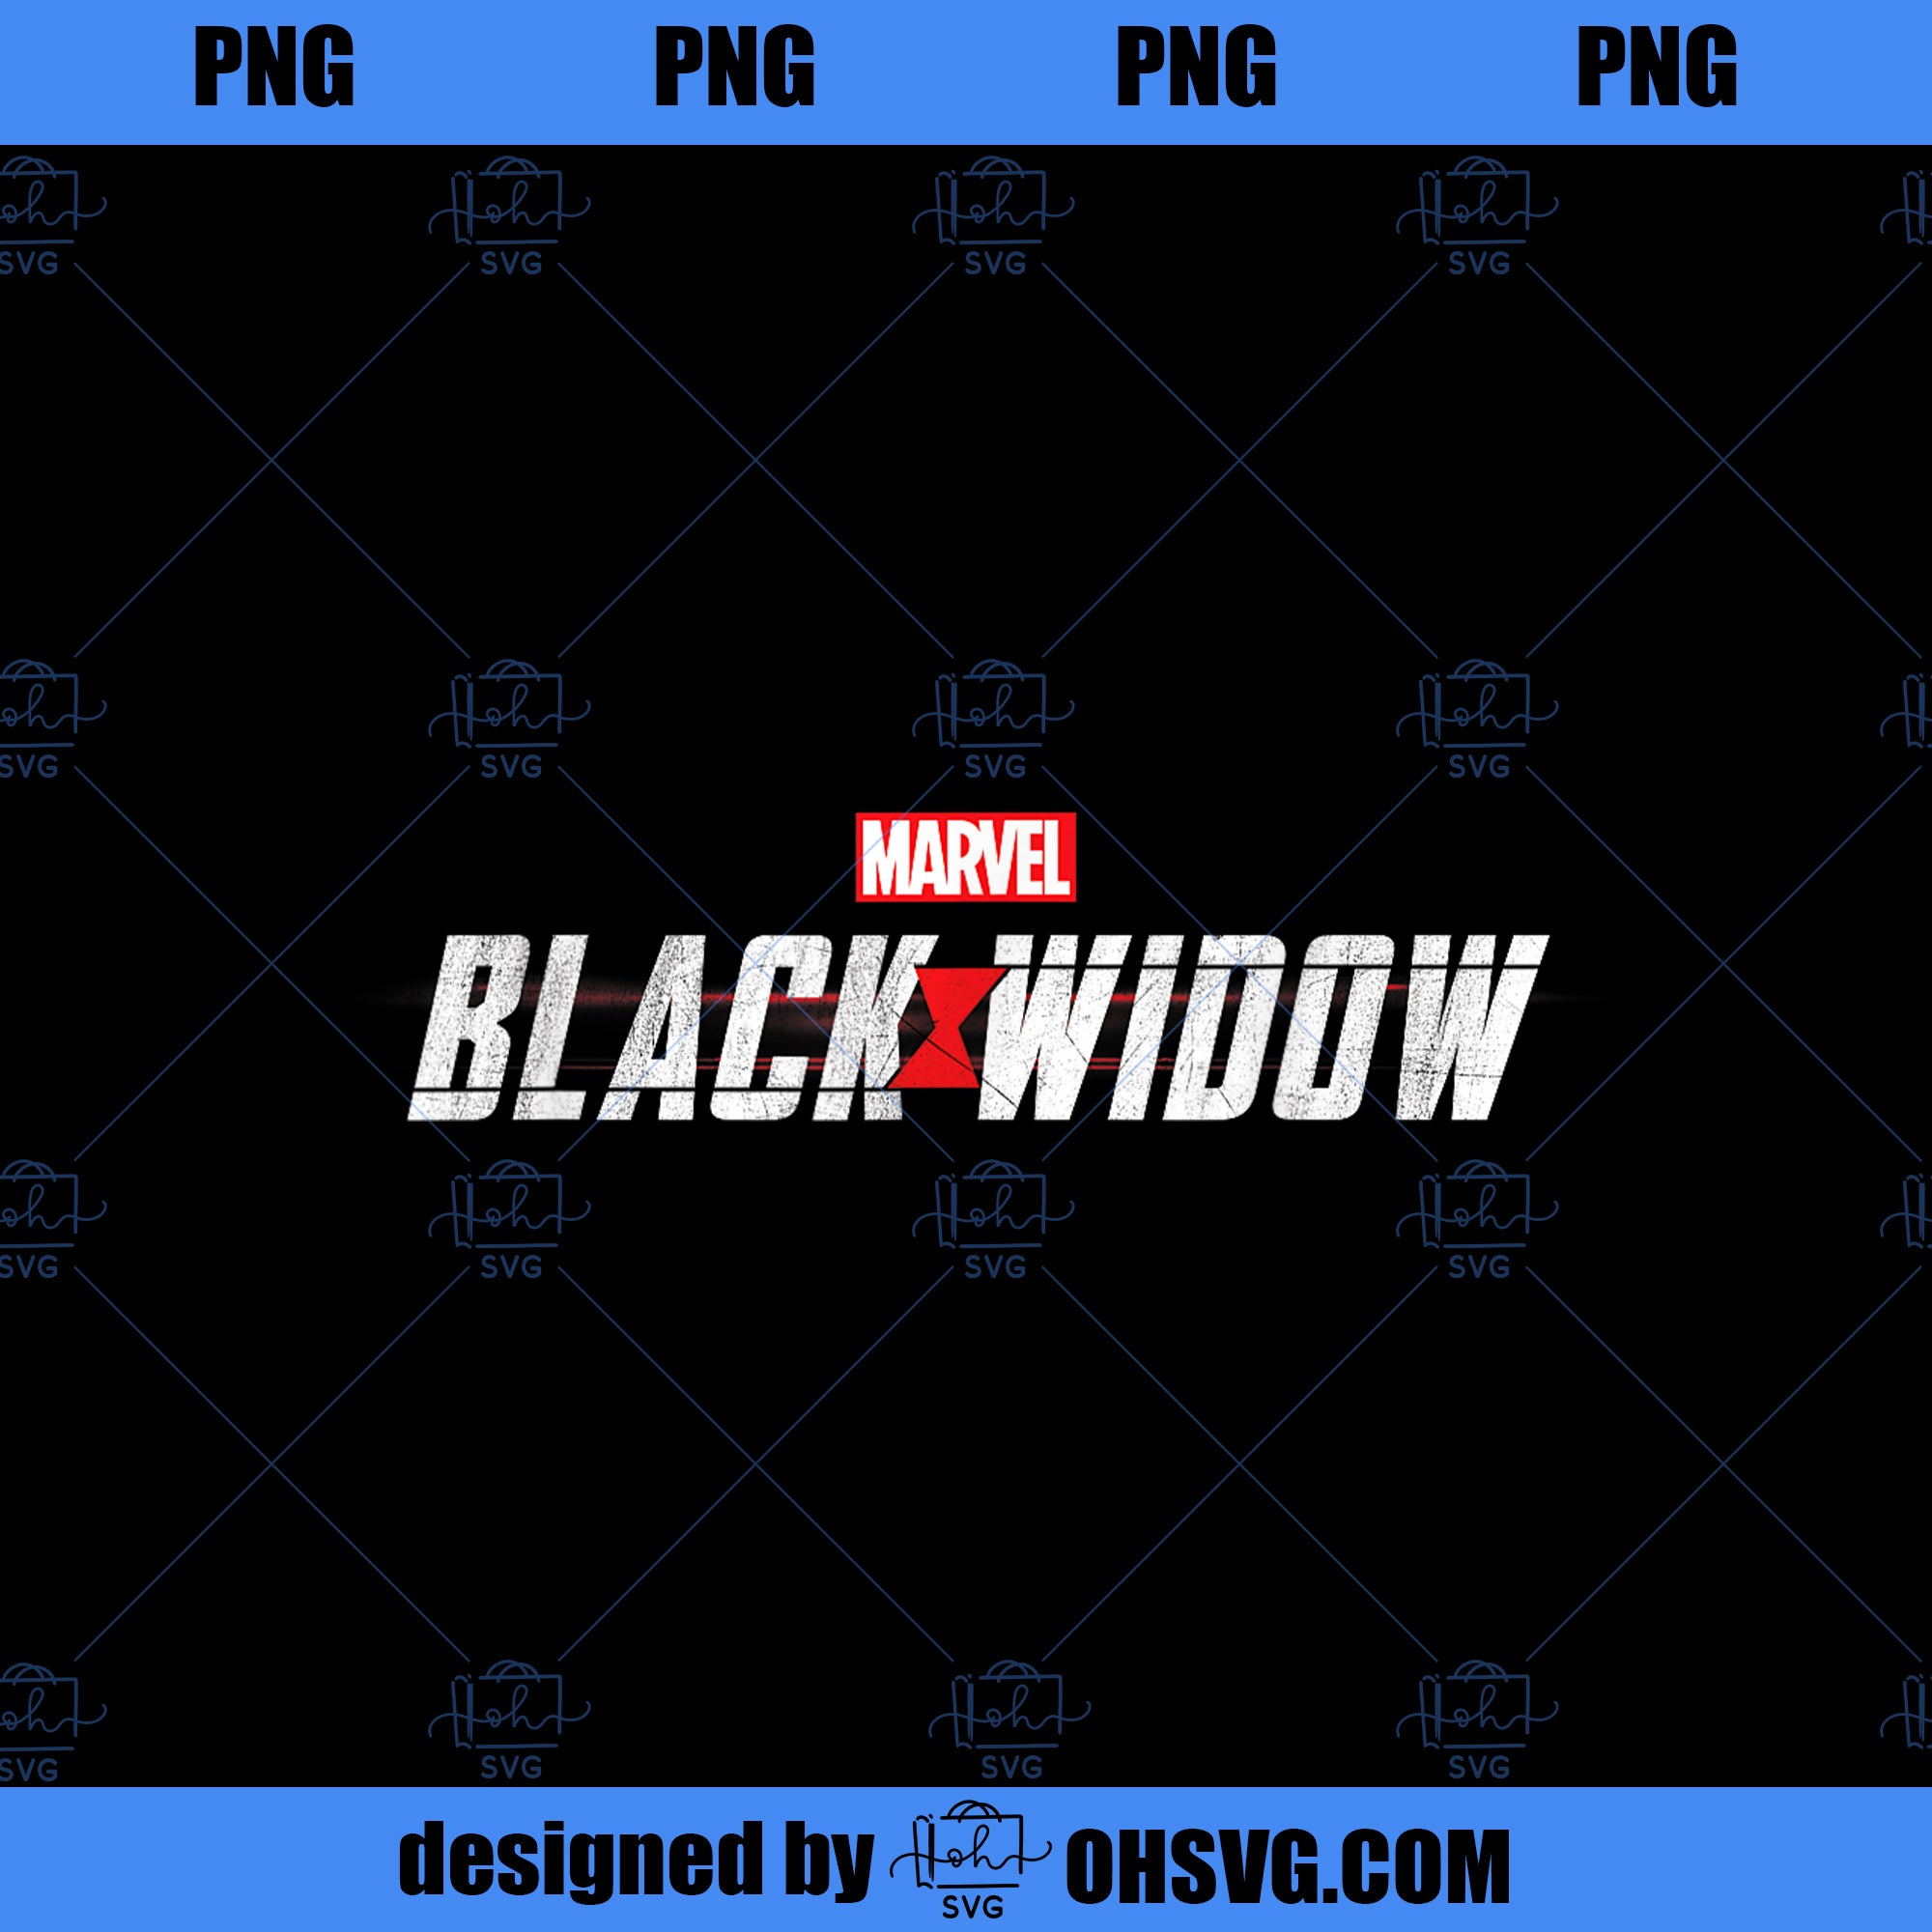 Marvel Black Widow Movie Logo PNG, Movies PNG, Black Widow PNG